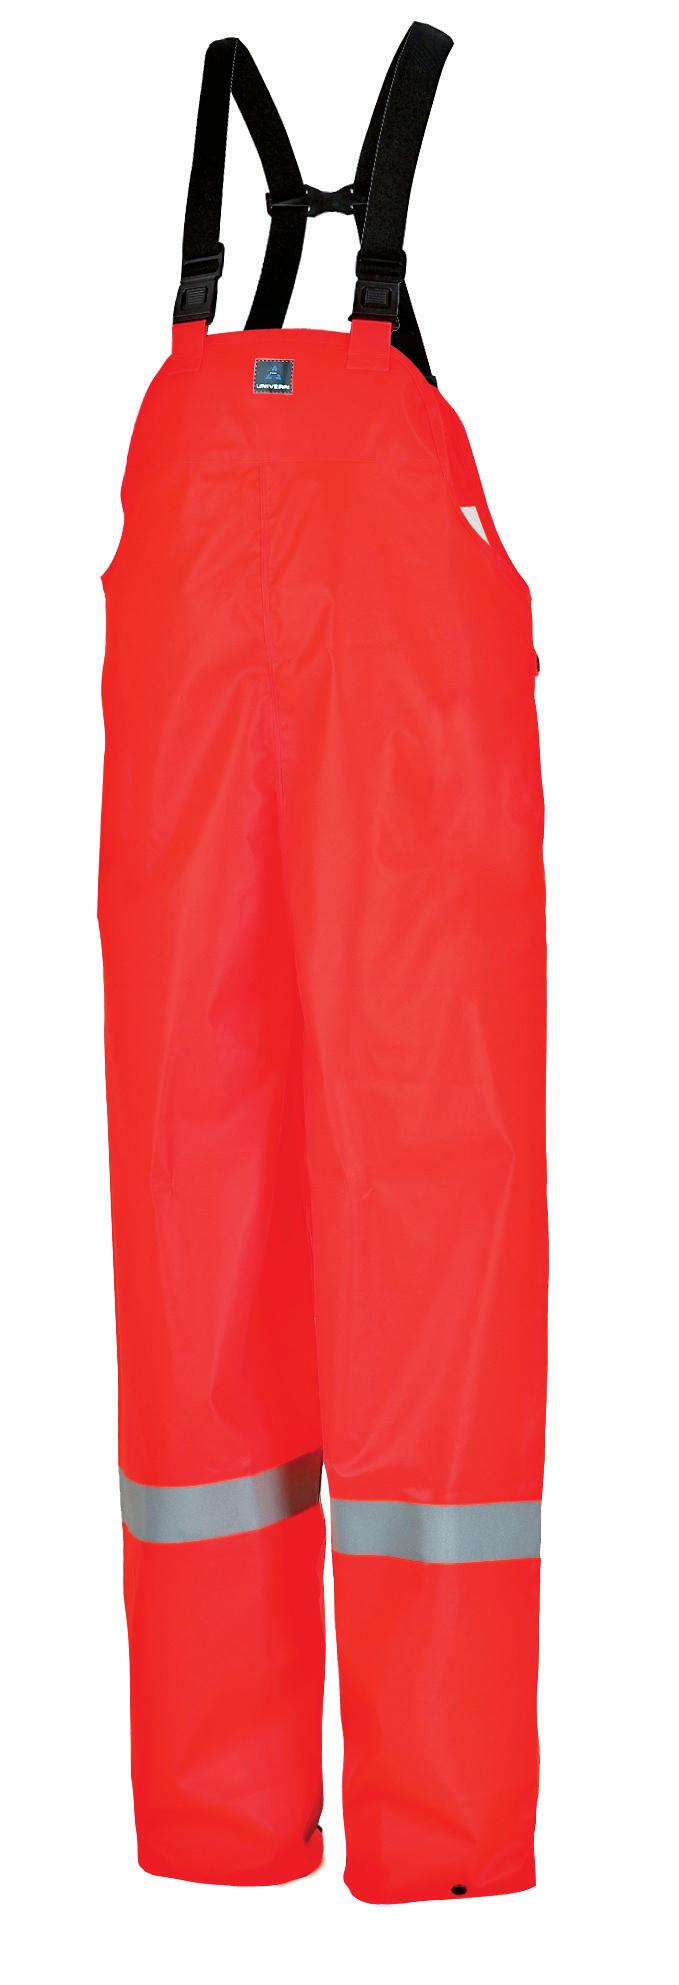 FR5513-05 Orange Reversible trousers 5 cm grey reflective strip around legs Sizes S-XXXL Quality: Flame retardant PU on knit polyester Weight: 180 gram/m 2 CE: EN ISO 14116 EN 343 Offshore flame